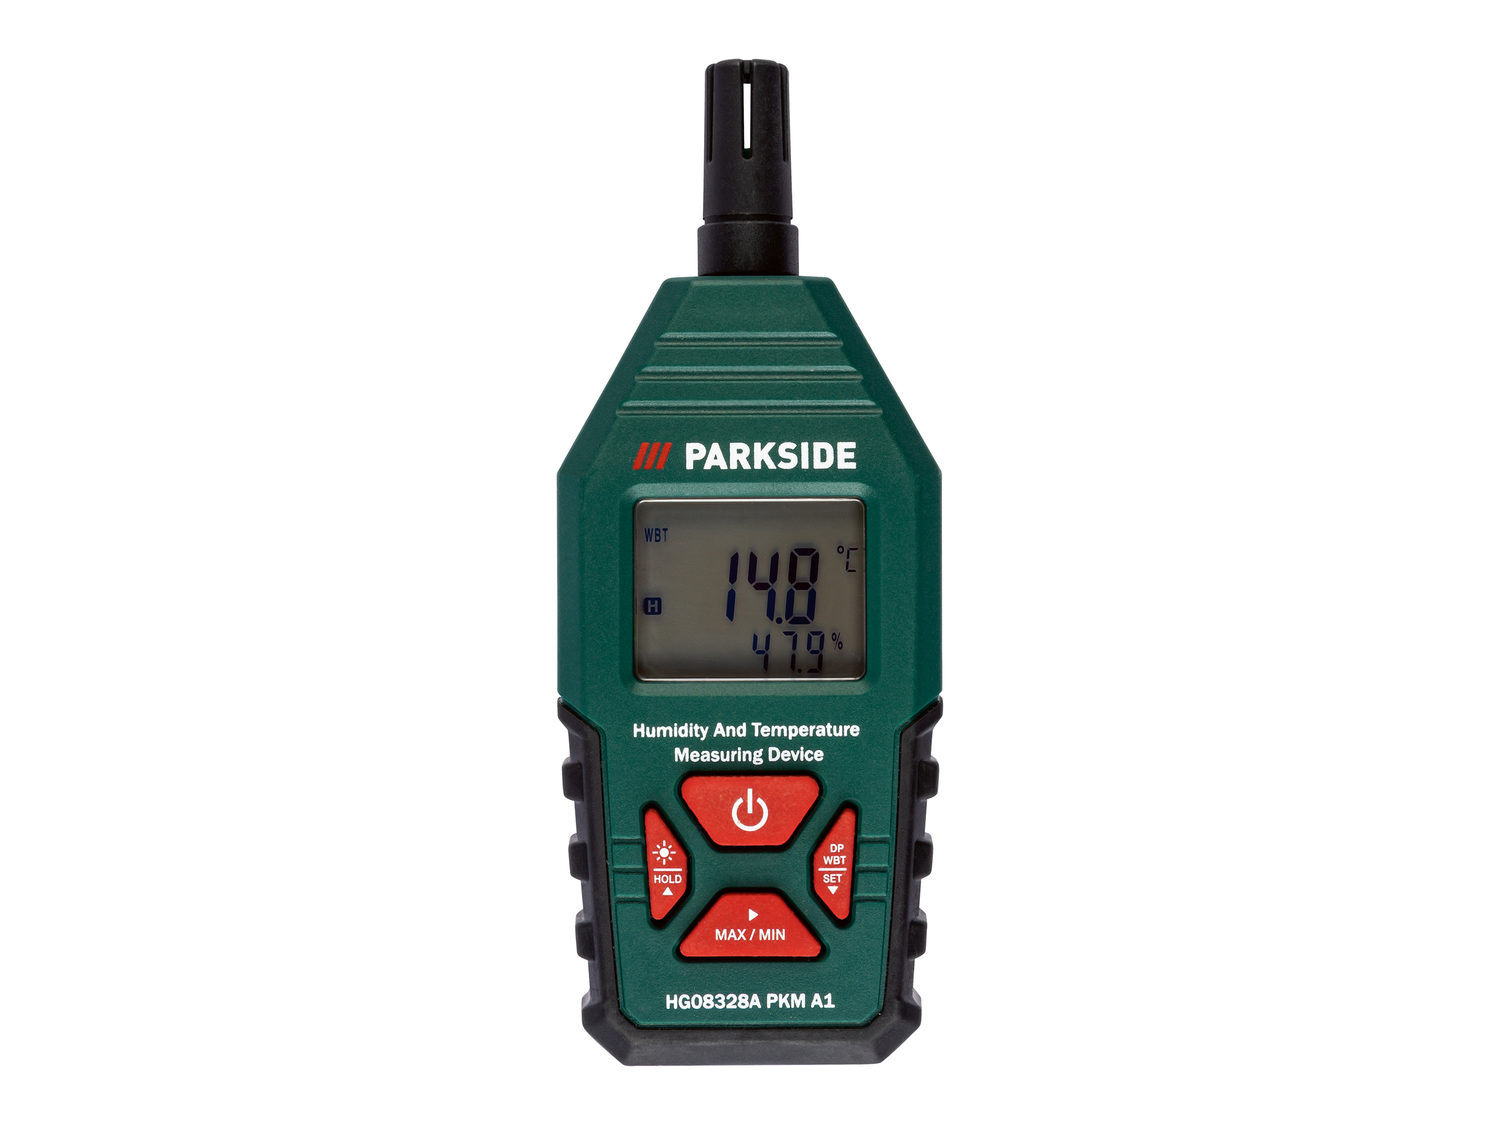 Igrometro e termometro o anemometro Parkside, prezzo 17.99 &#8364; 
- Con sensori ...